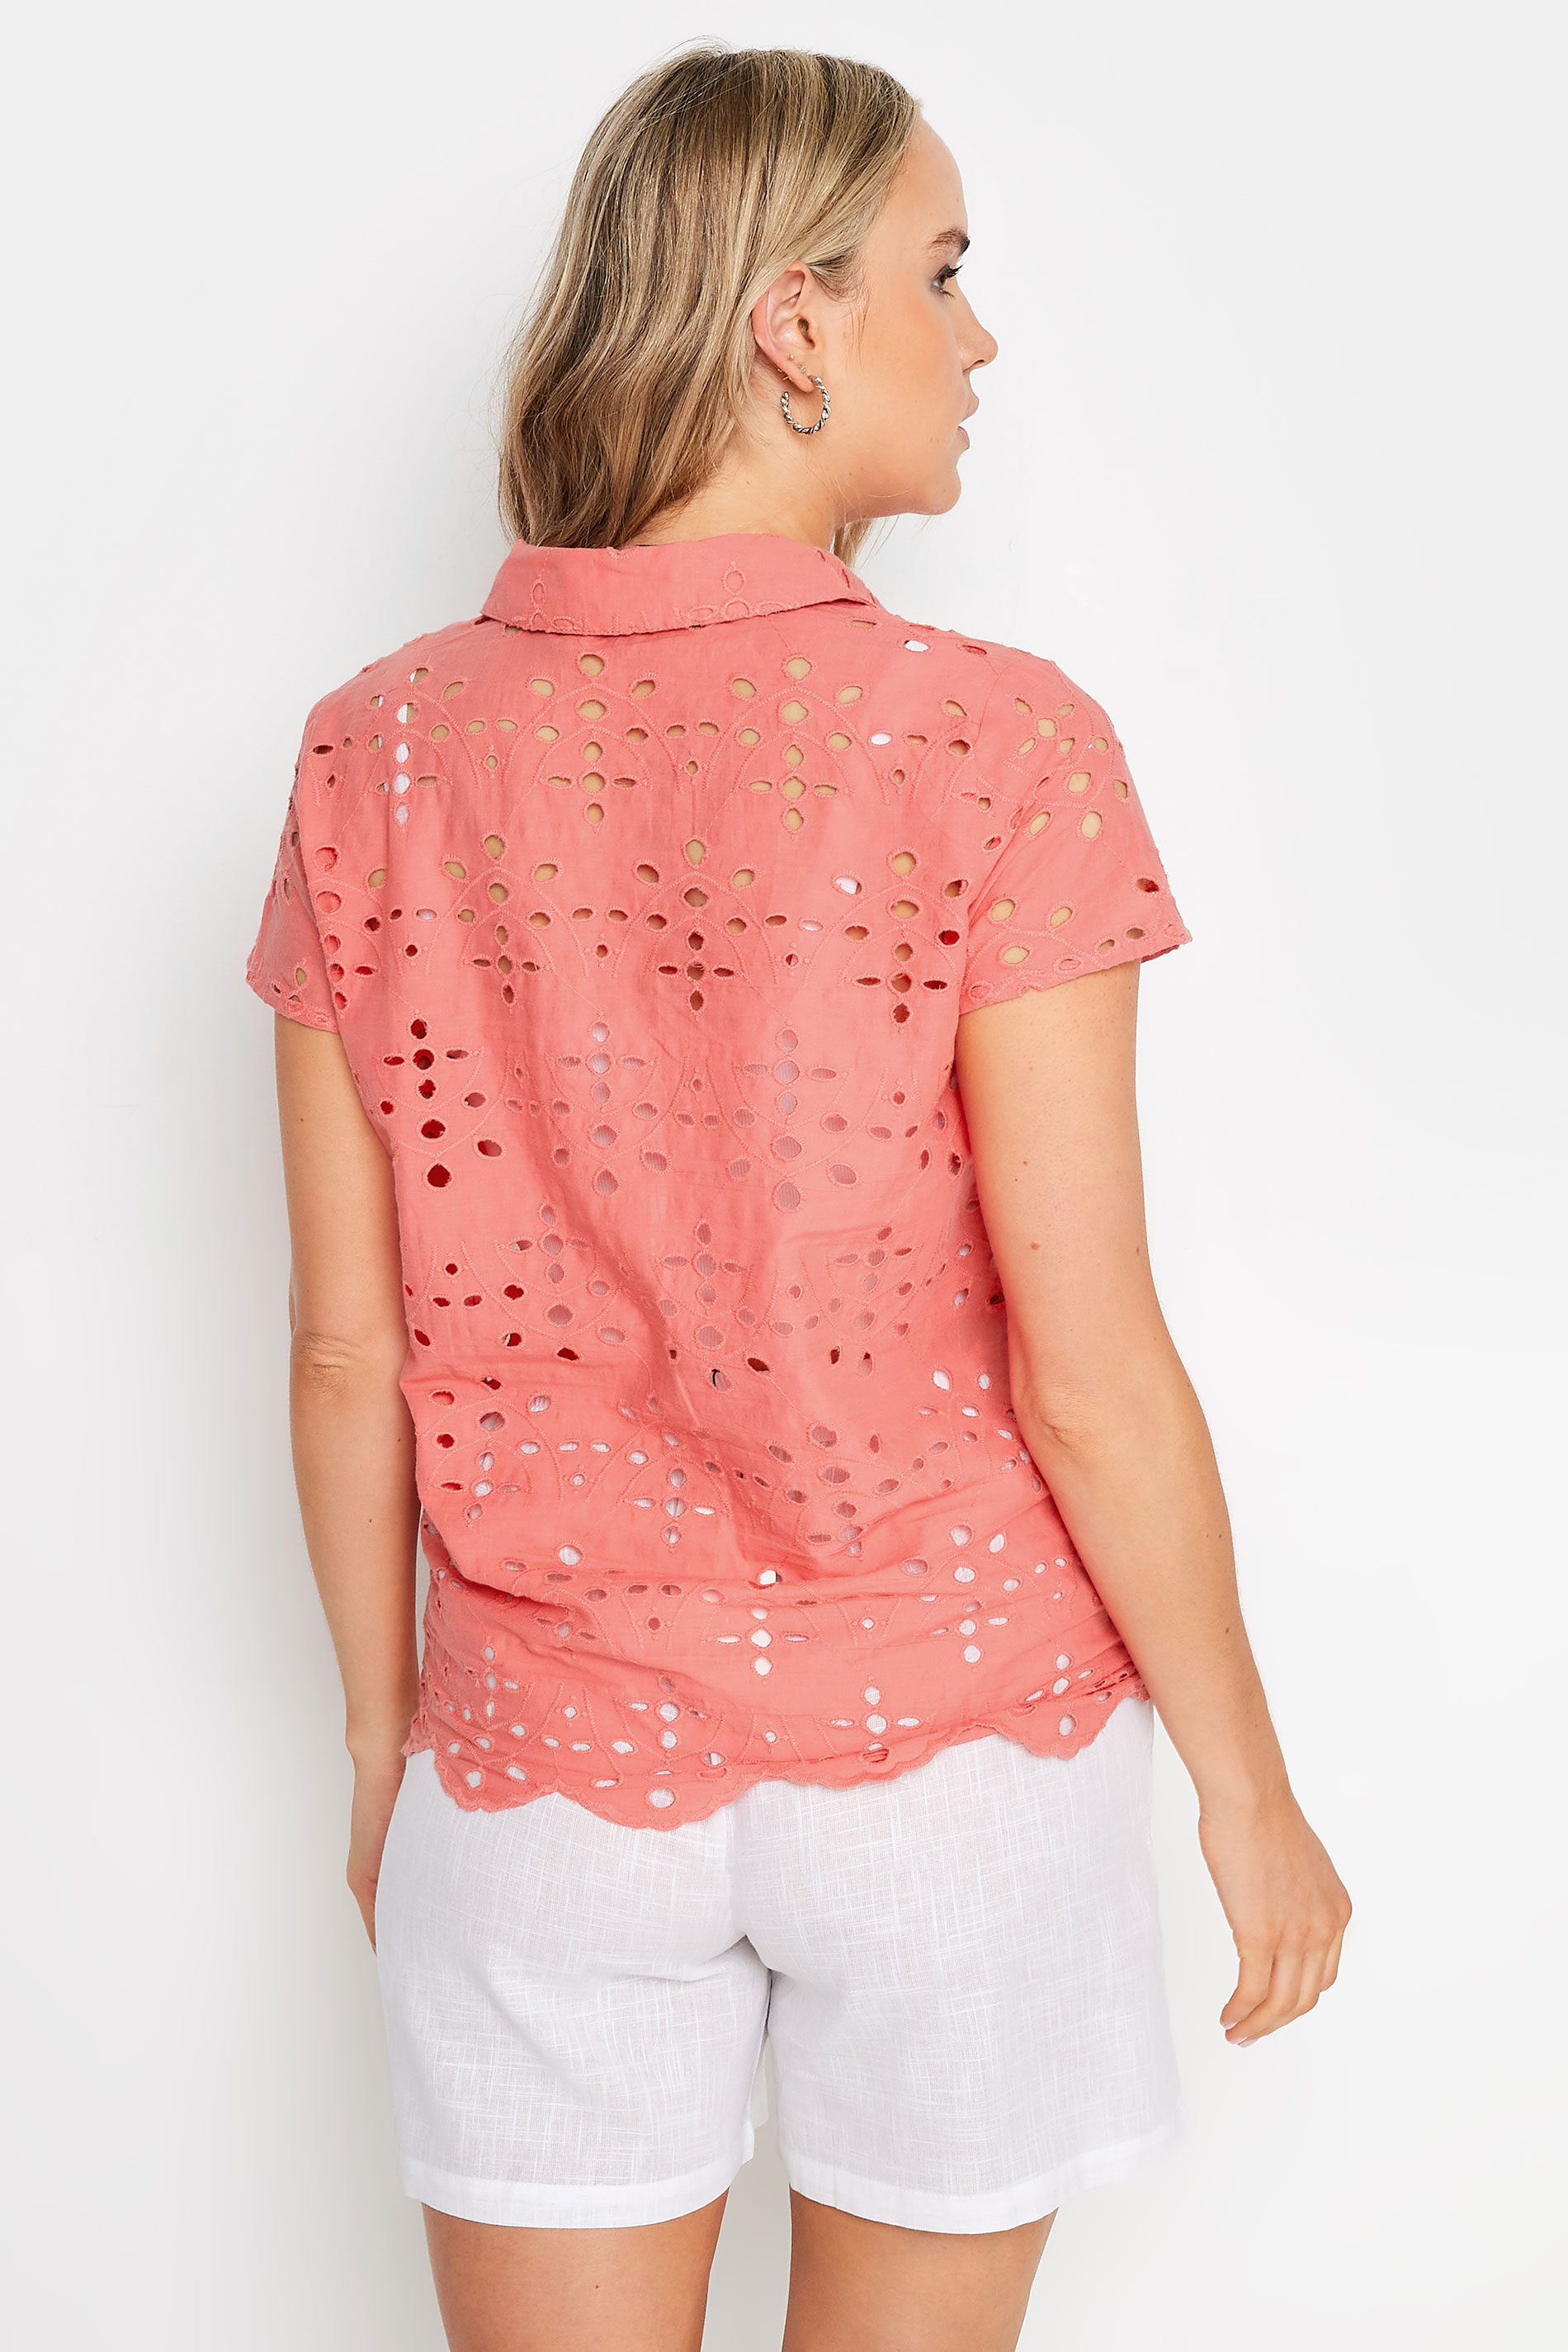 LTS Tall Women's Coral Pink Broderie Shirt | Long Tall Sally 3